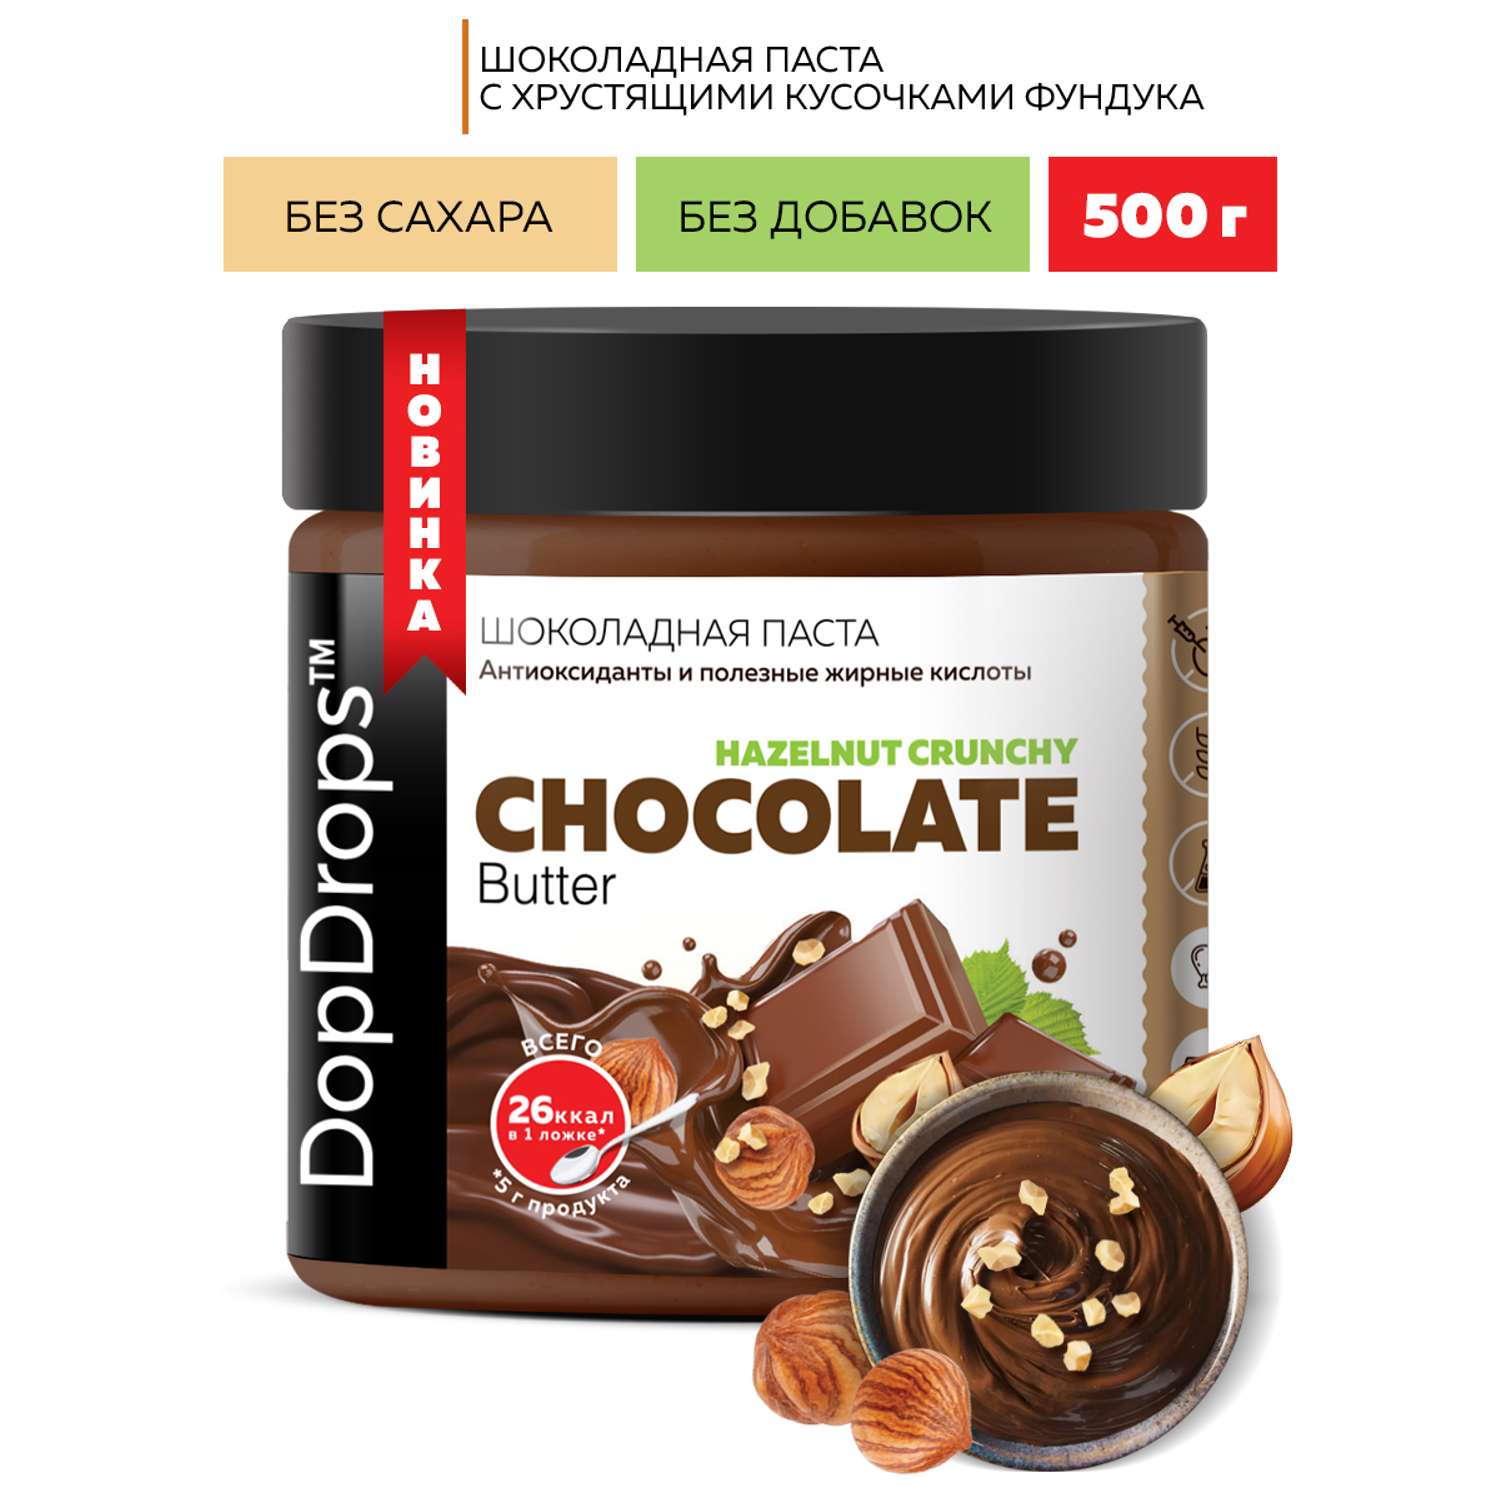 Шоколадная паста DopDrops с кусочками фундука 500 г - фото 1